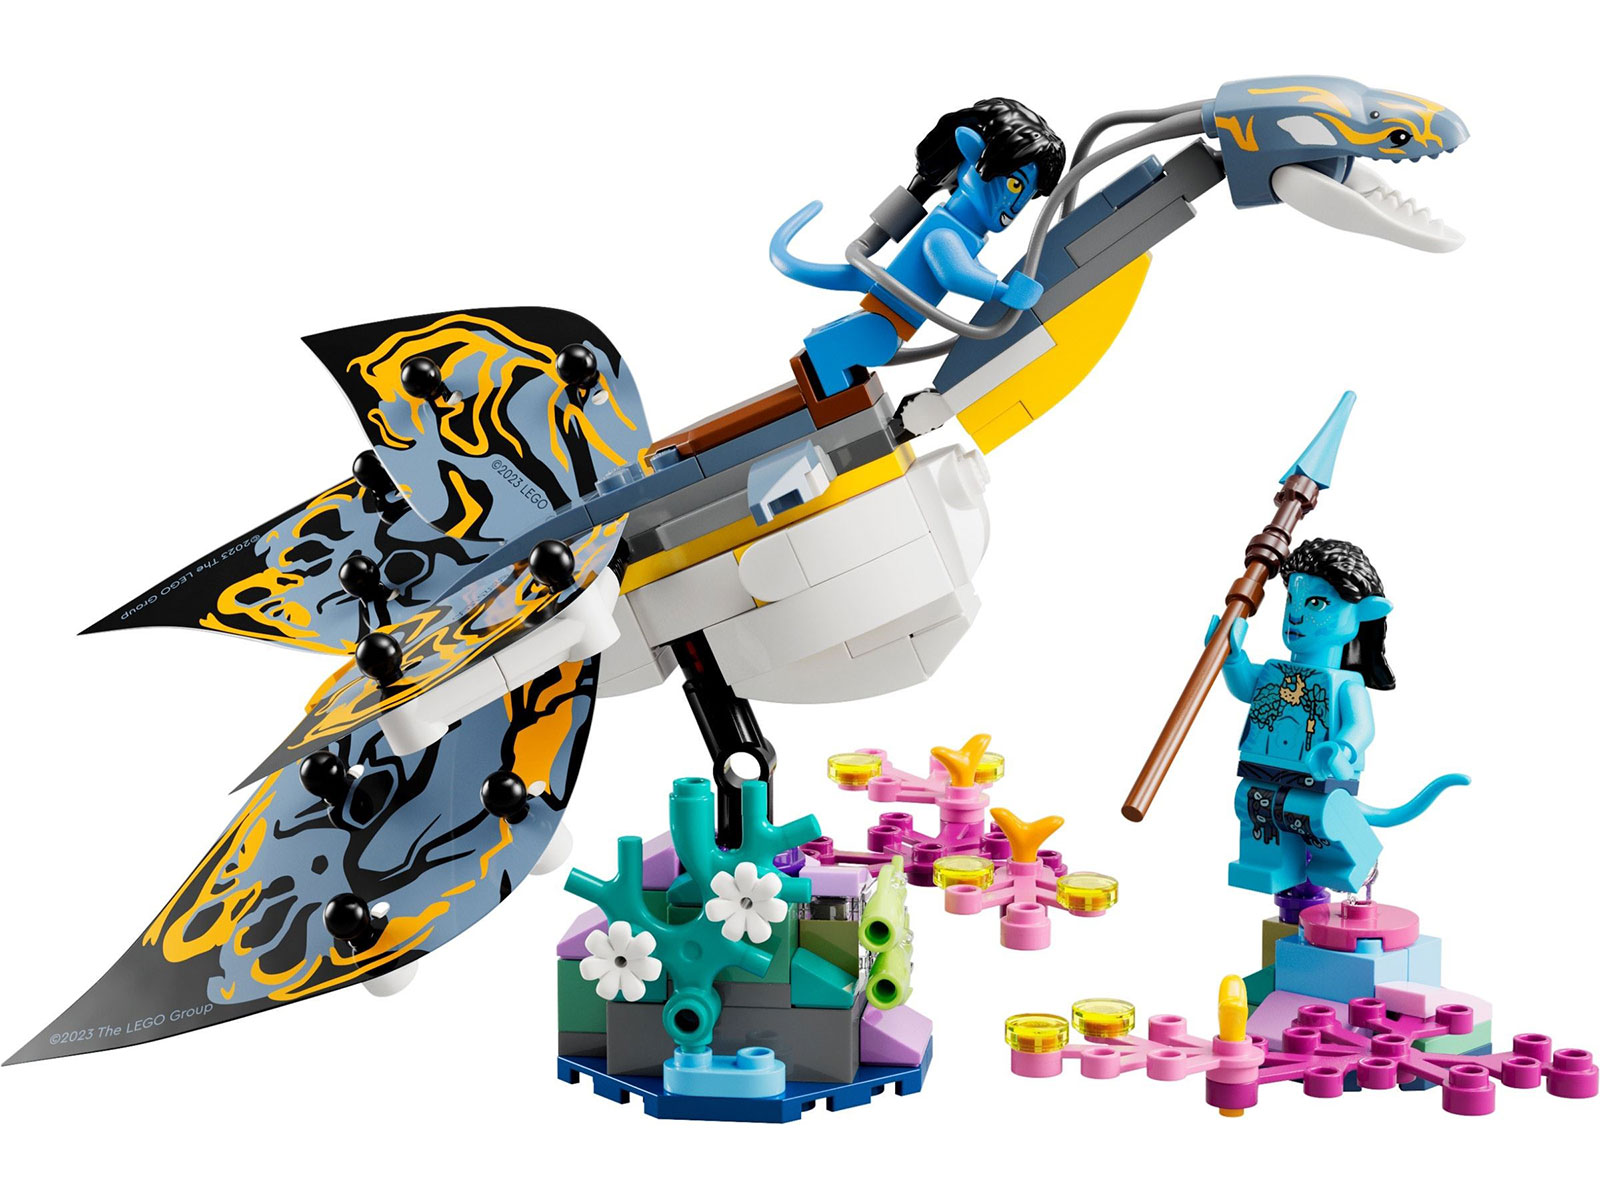 LEGO® Avatar 75575 - Entdeckung des Ilu